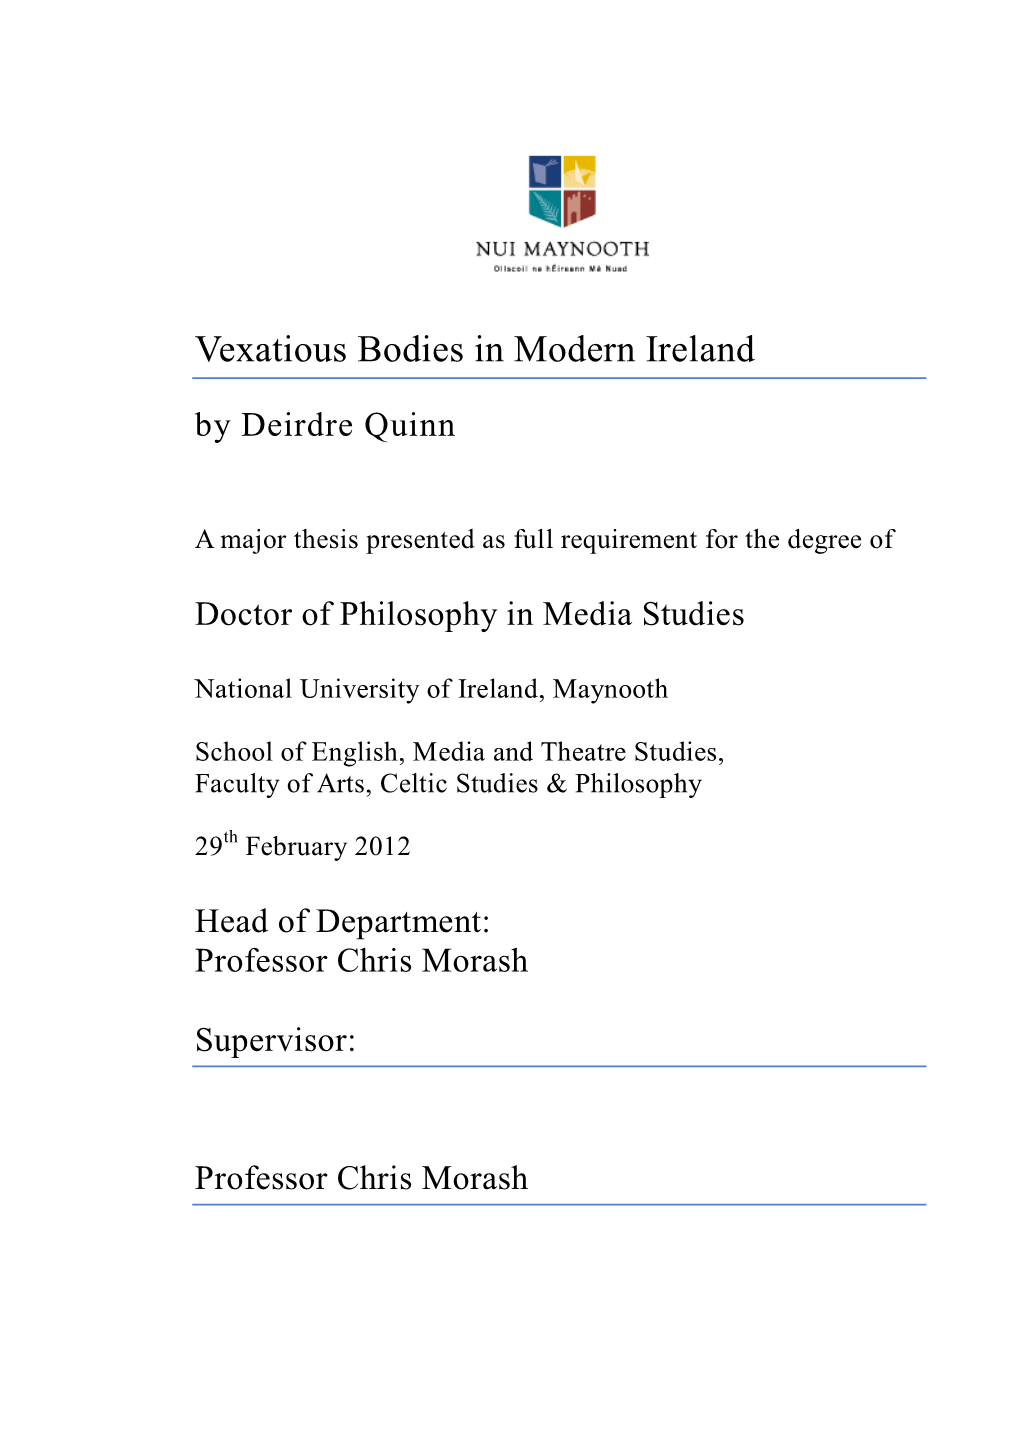 Vexatious Bodies in Modern Ireland by Deirdre Quinn